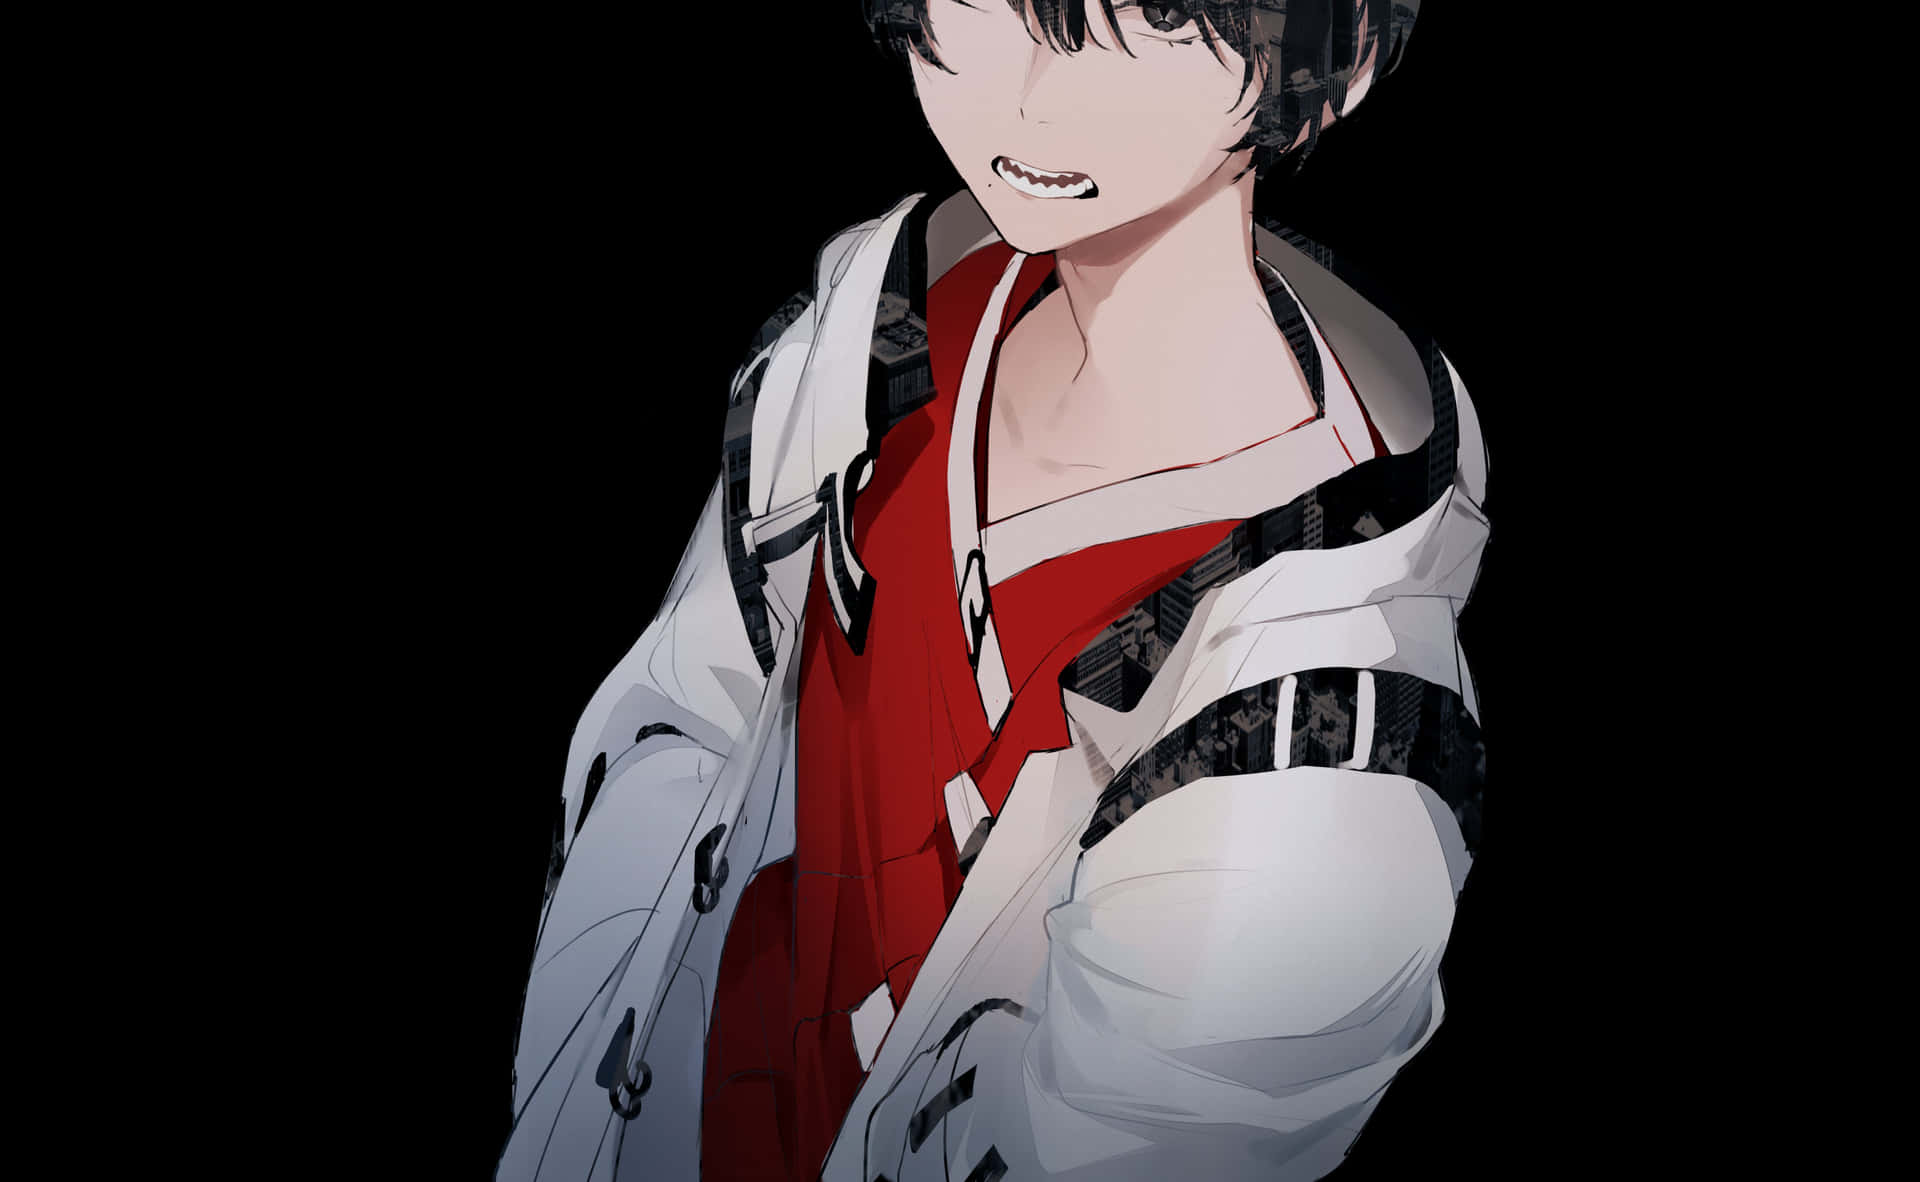 Anime Boy Black Hair Red Shirt Wallpaper